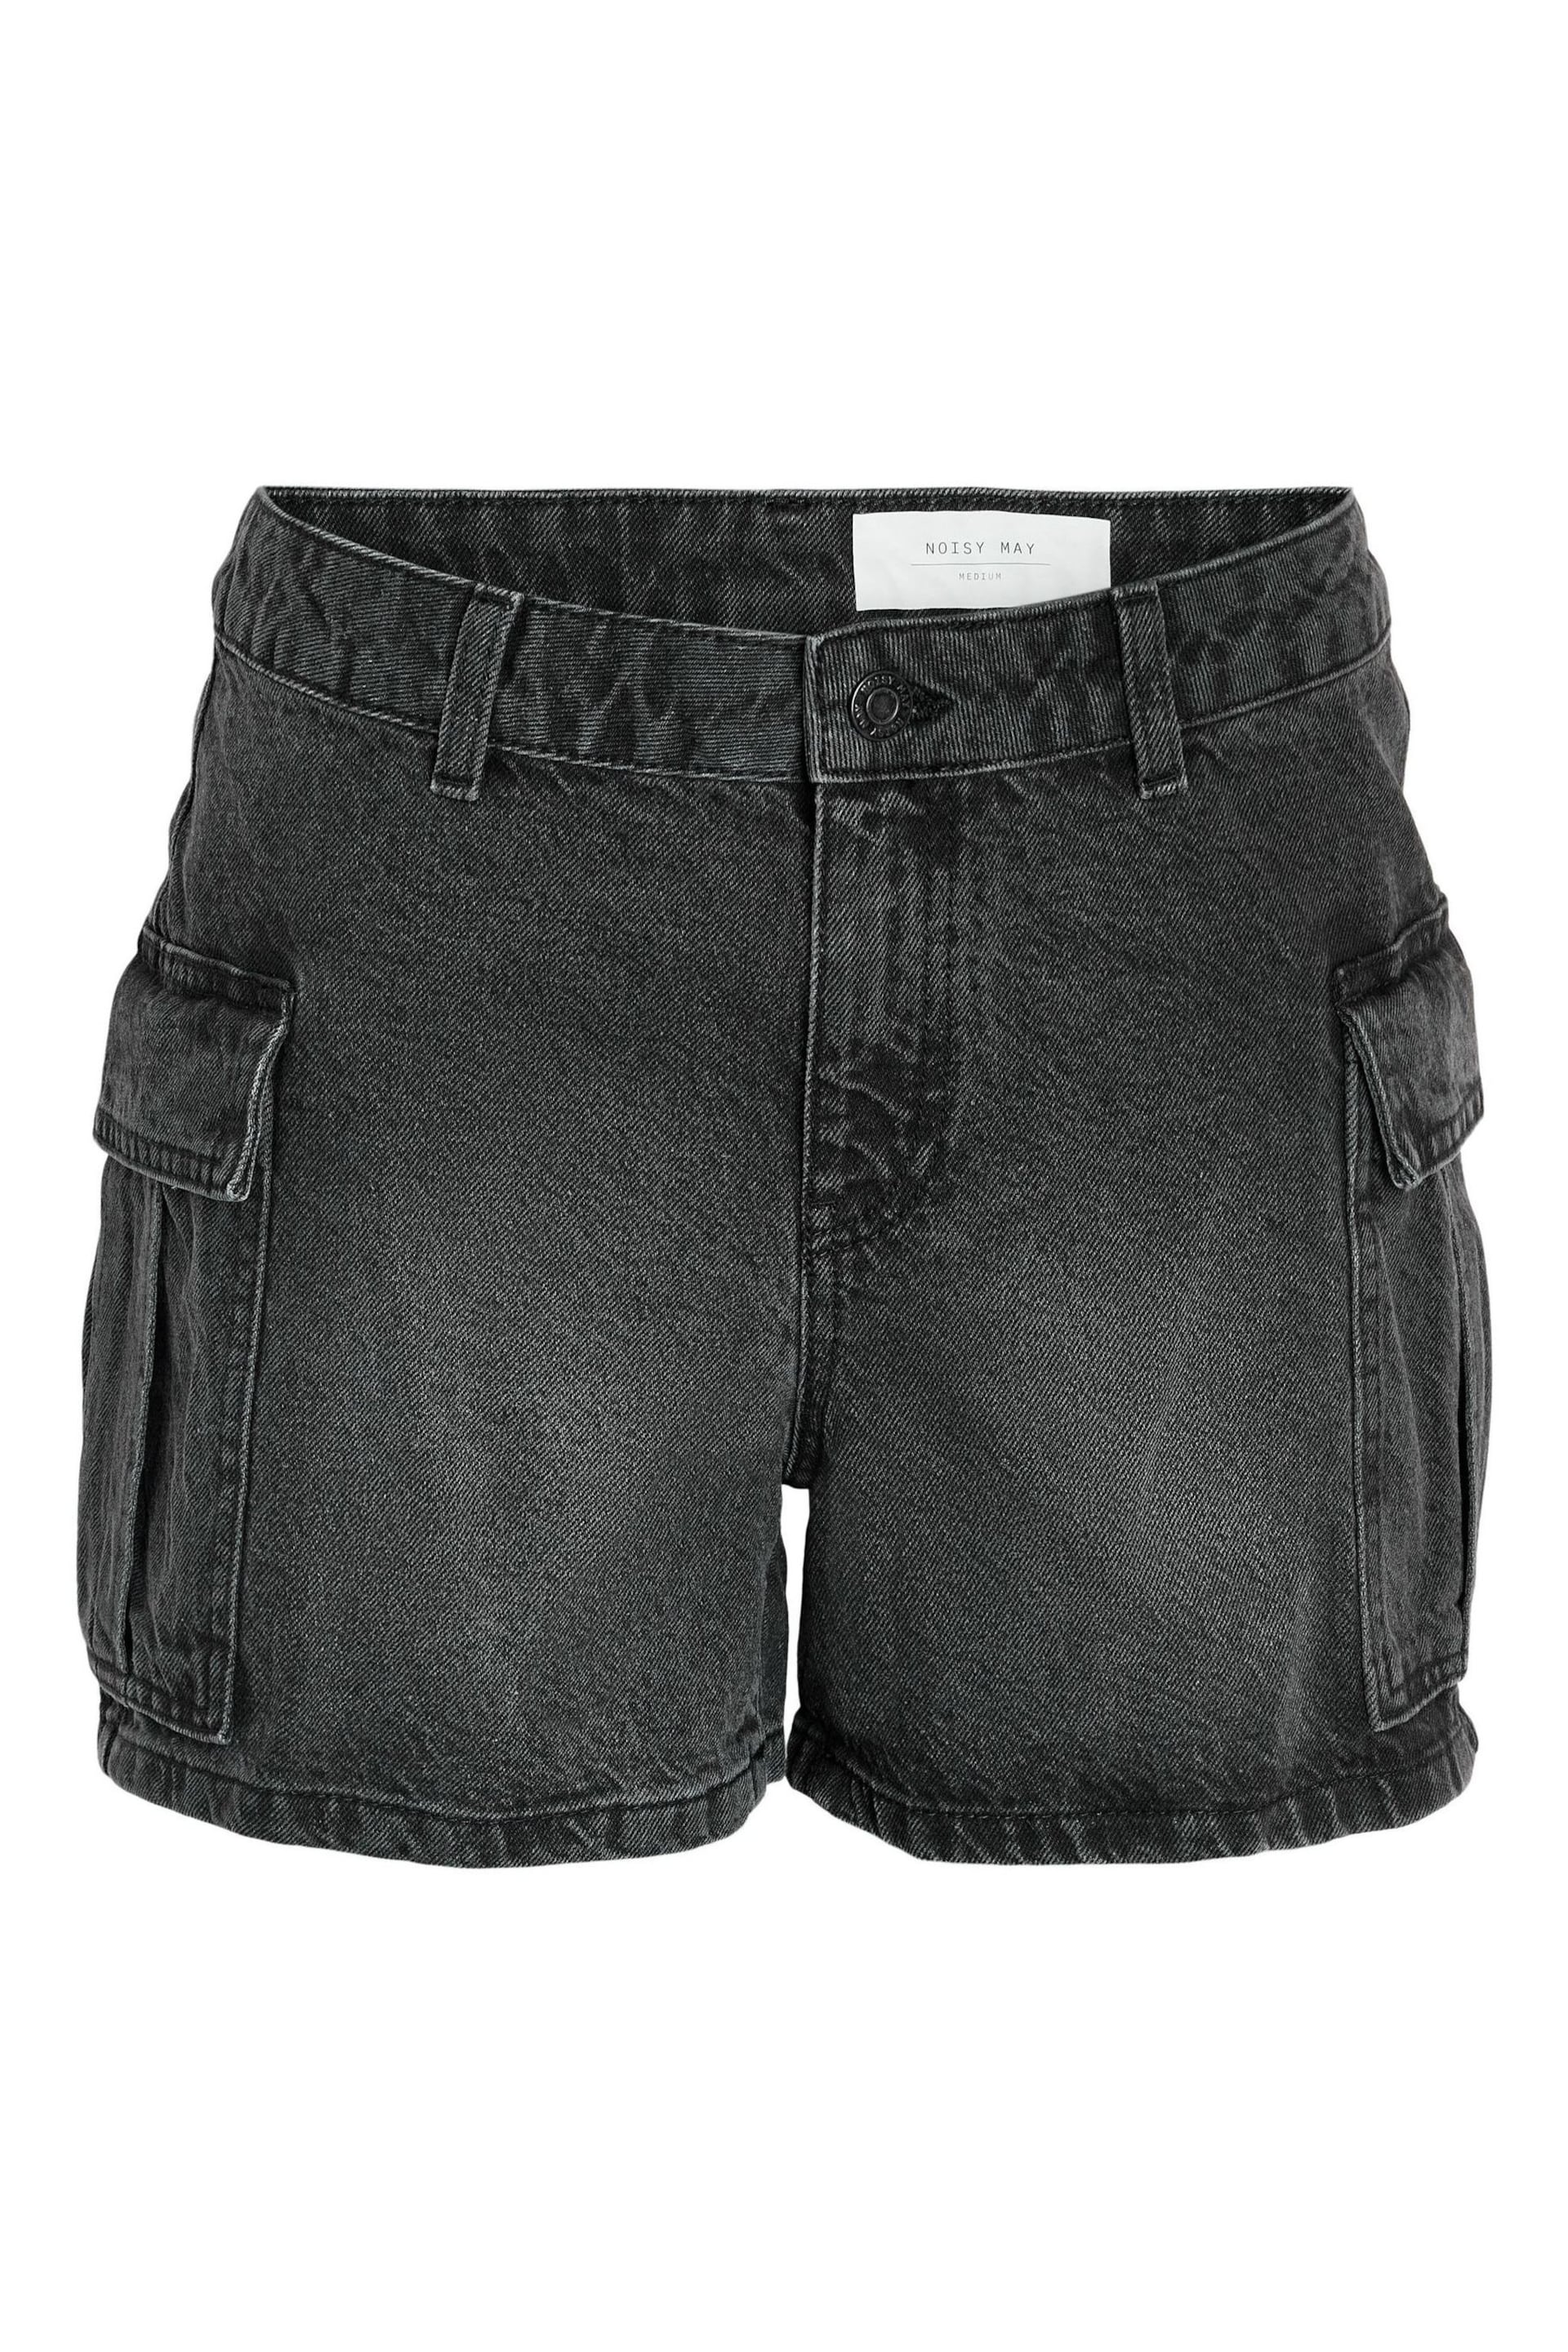 NOISY MAY Black Cargo Mom Denim Shorts - Image 7 of 8